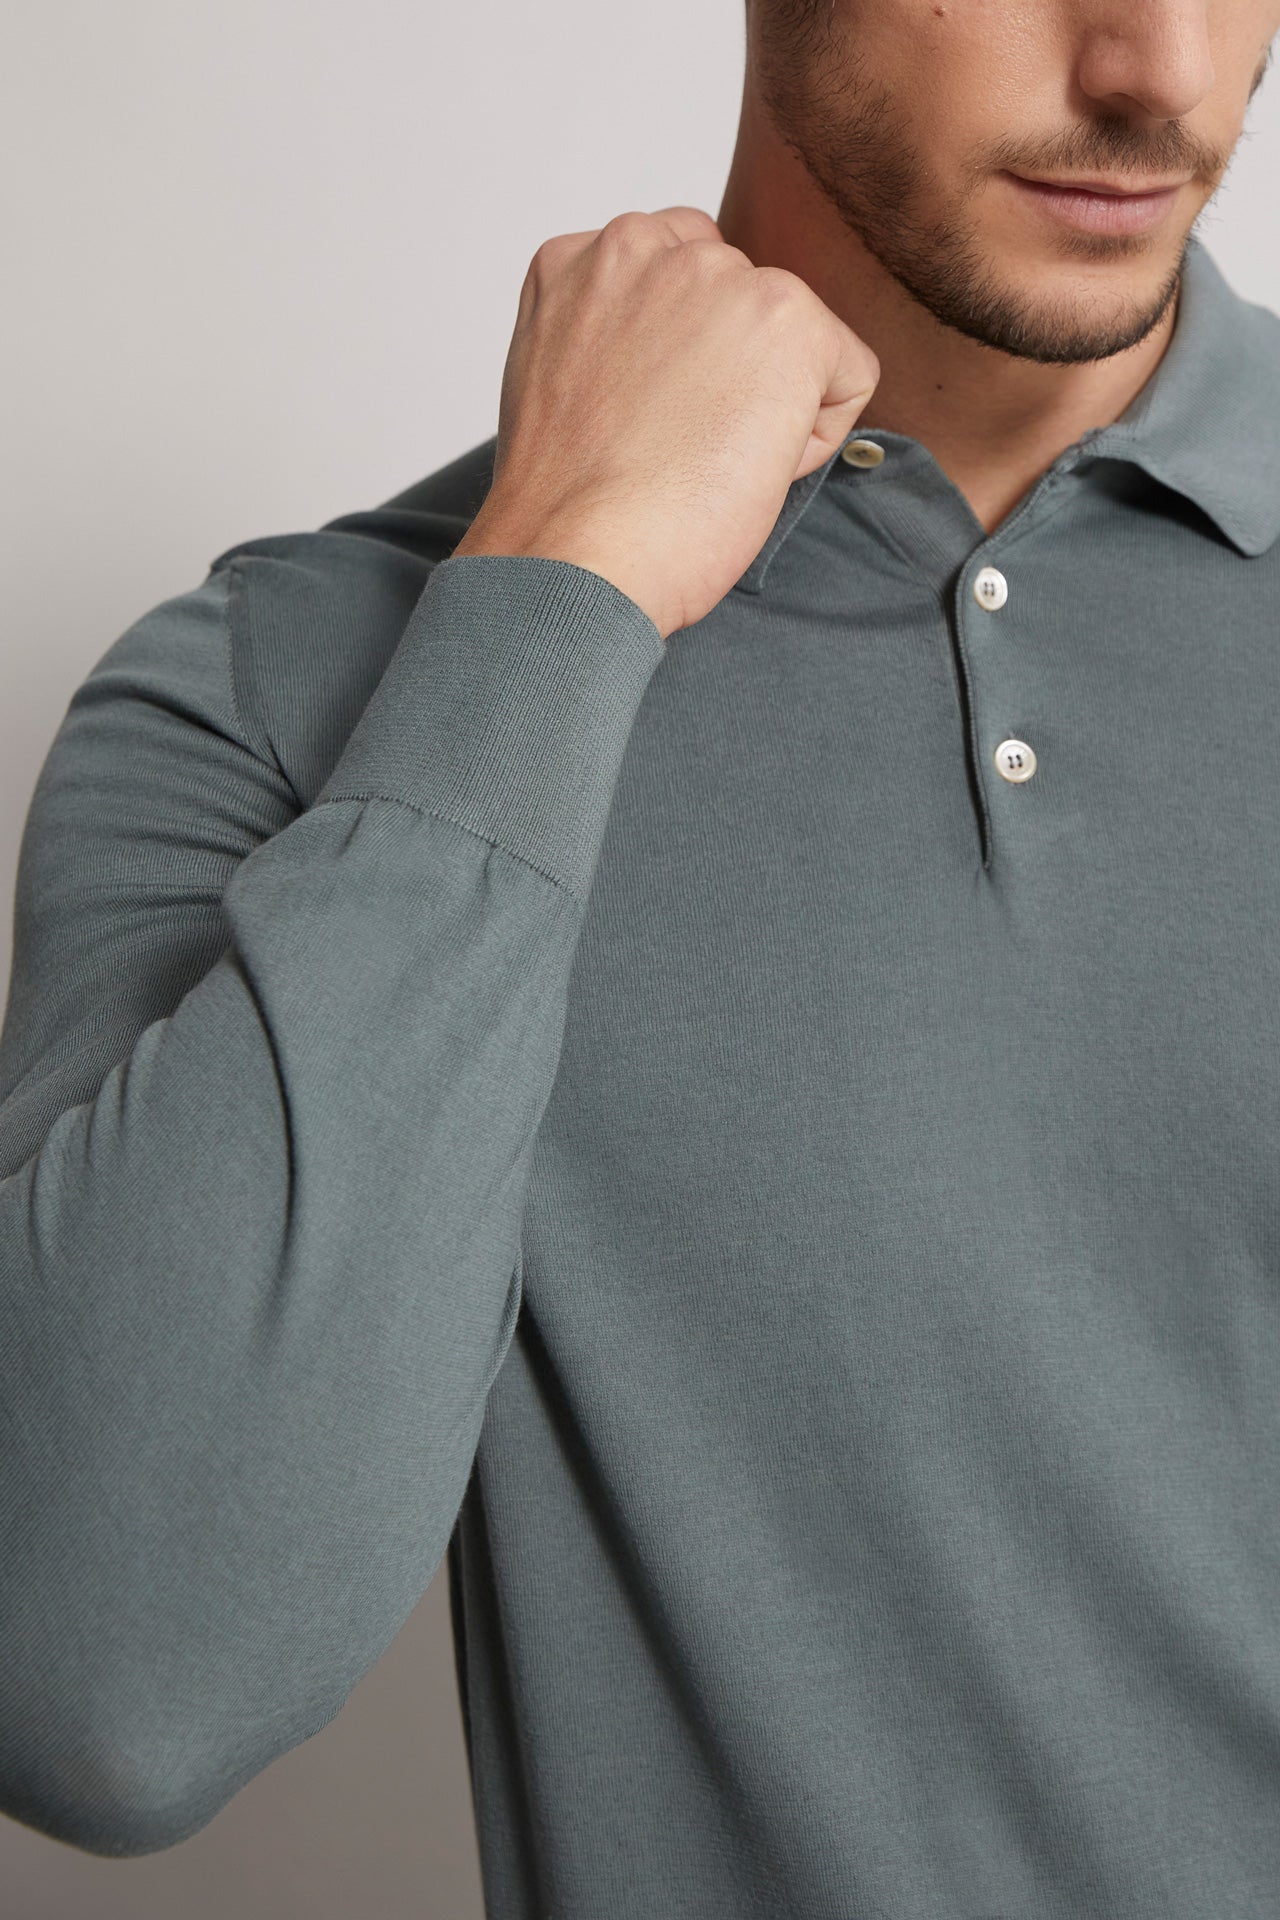 knitted organic cotton polo shirt light green - neck detail